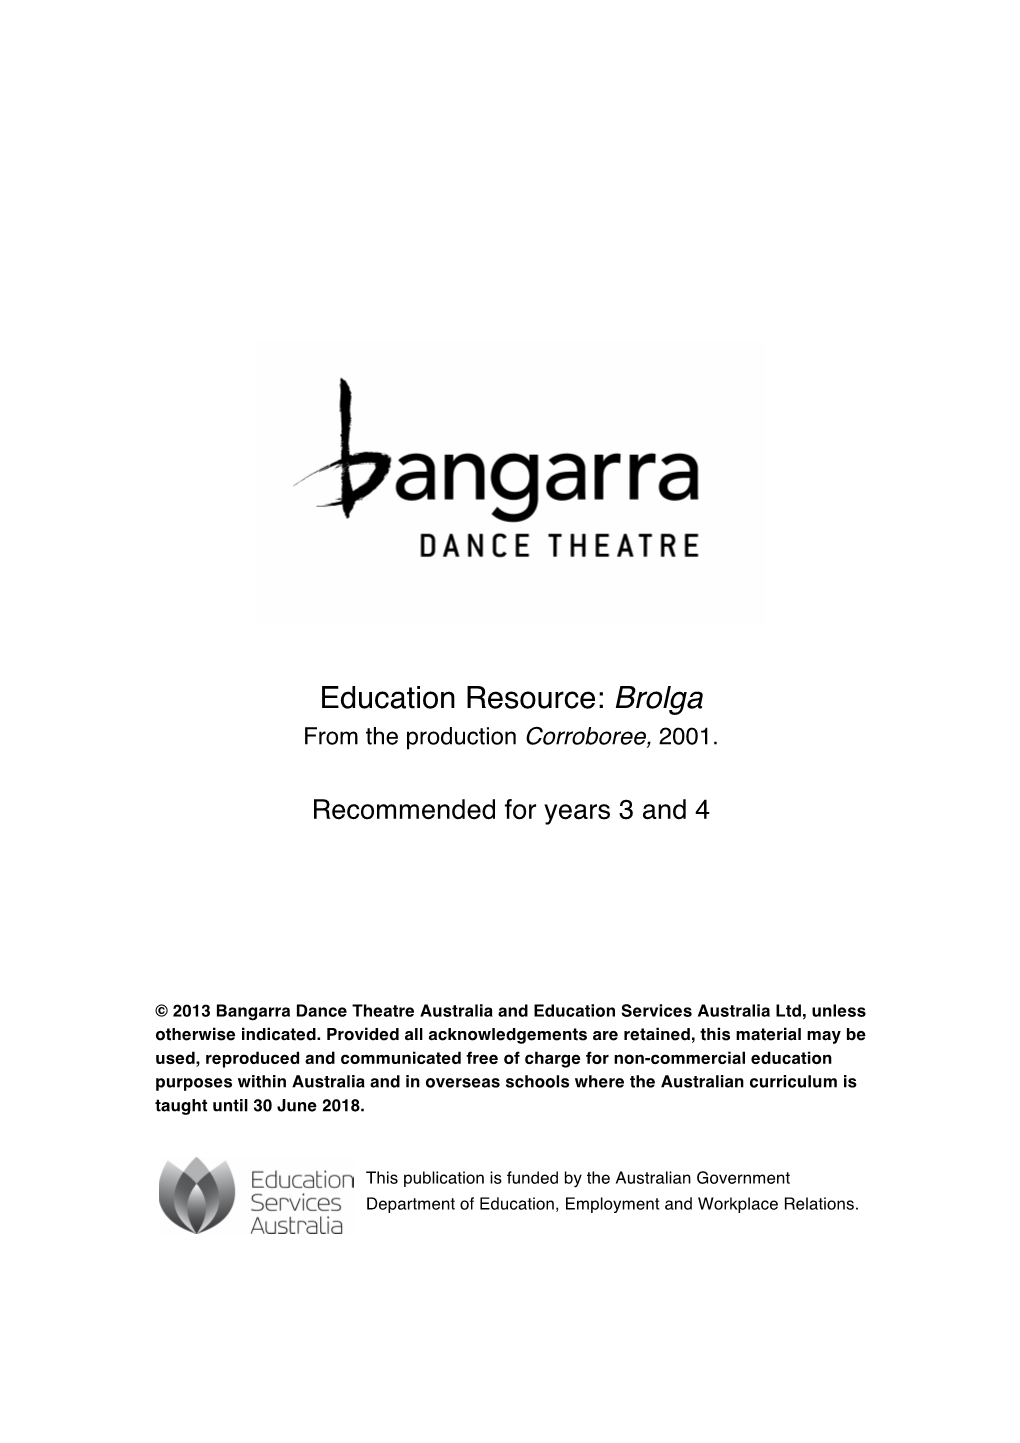 Education Resource: Brolga from the Production Corroboree, 2001